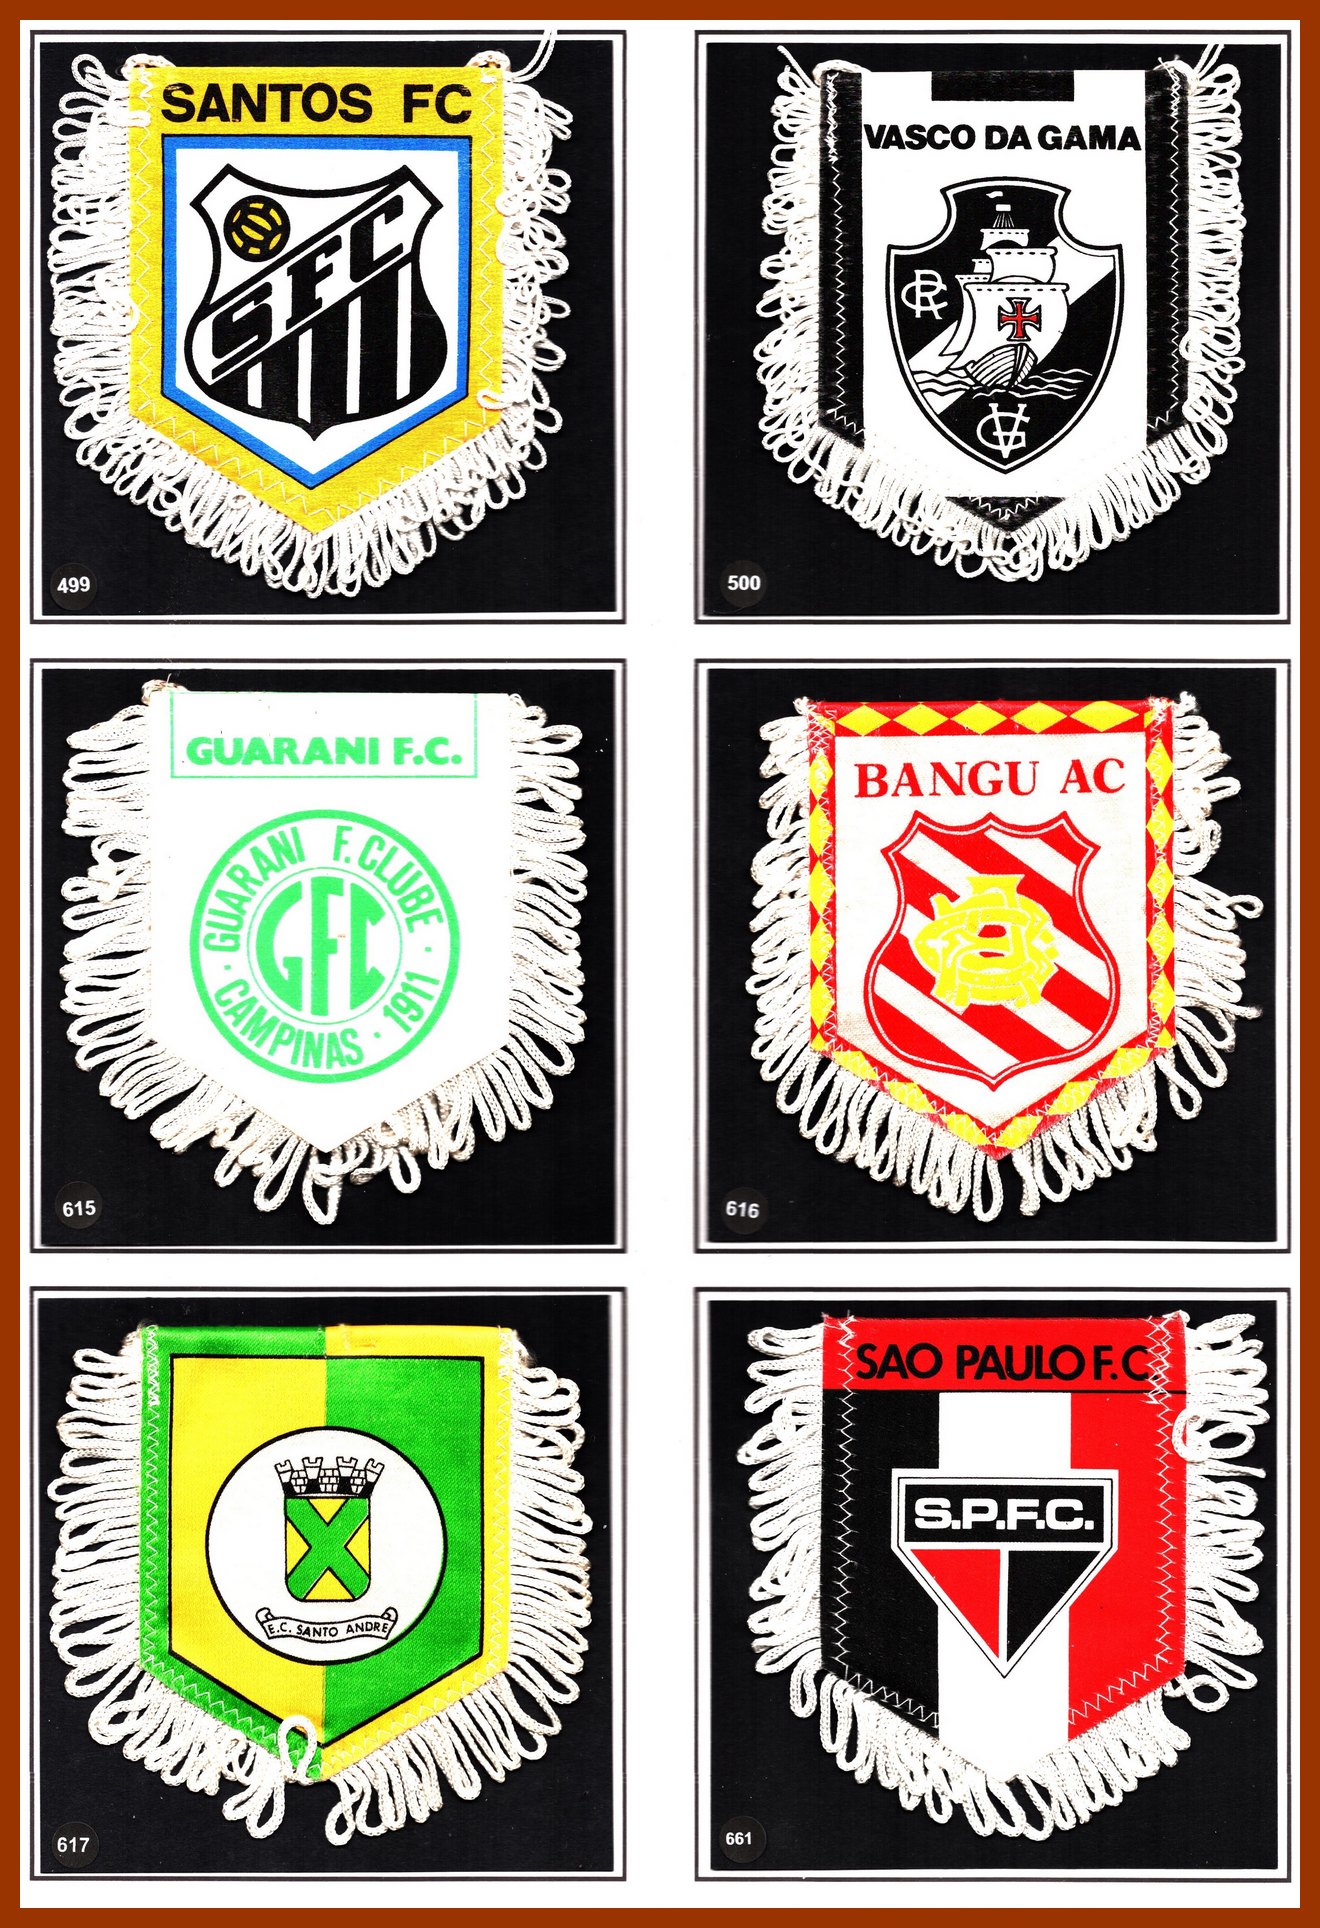 Photo 573 BRESIL (Page 02): Santos FC - Vasco da Gama - Guarini FC - Bangu AC - Santo André FC -Sao Paulo